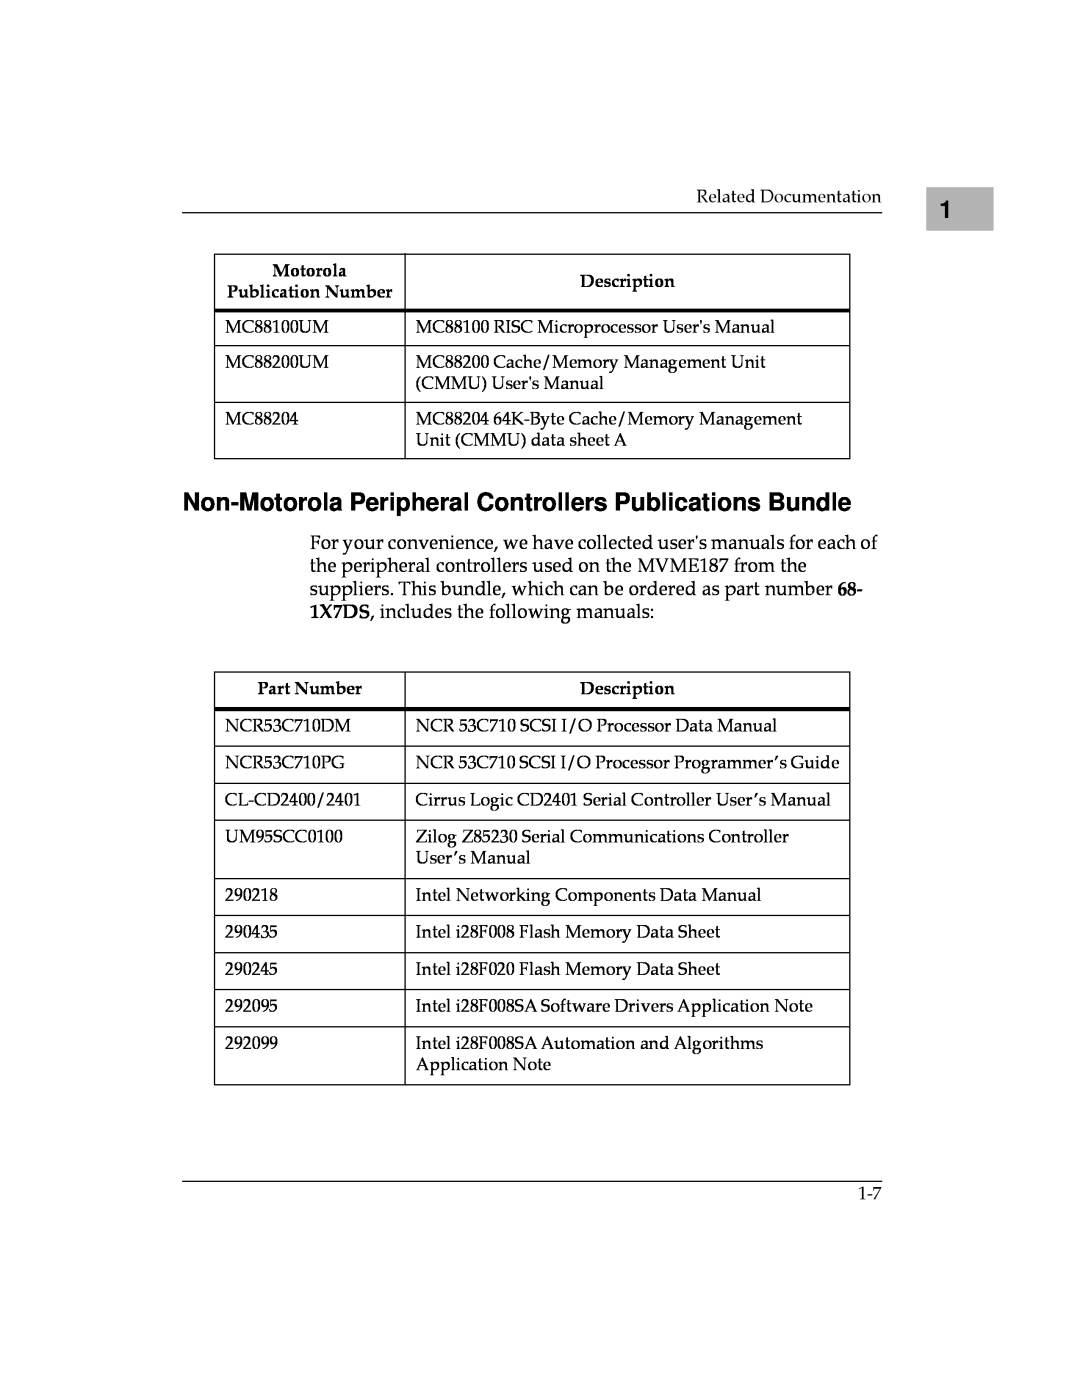 Motorola MVME187 manual Non-Motorola Peripheral Controllers Publications Bundle 